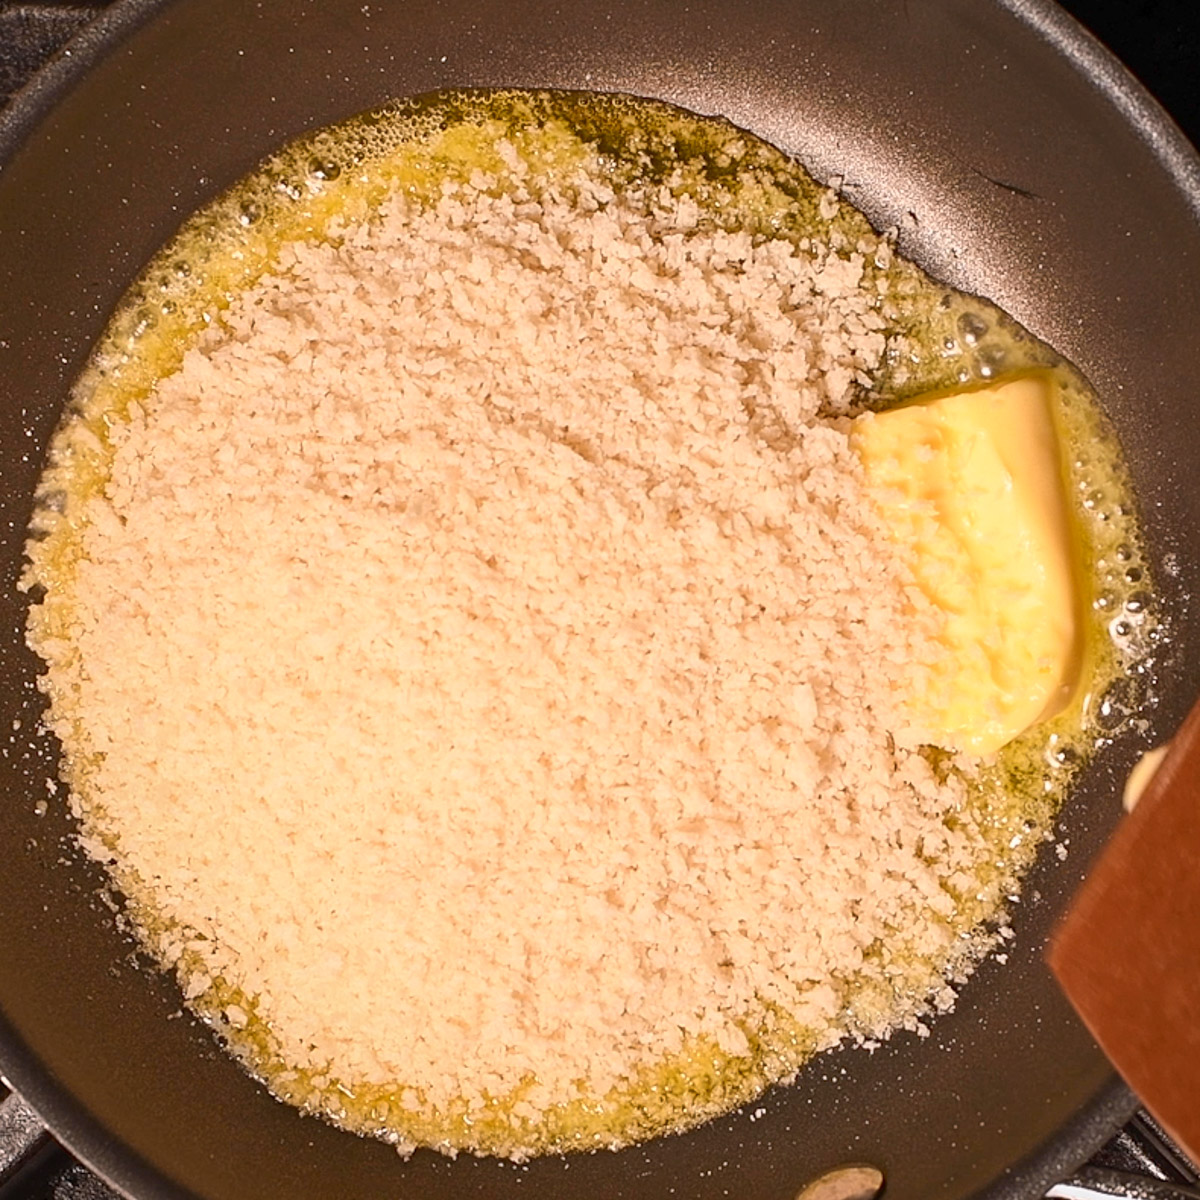 Sauté panko breadcrumbs in butter.